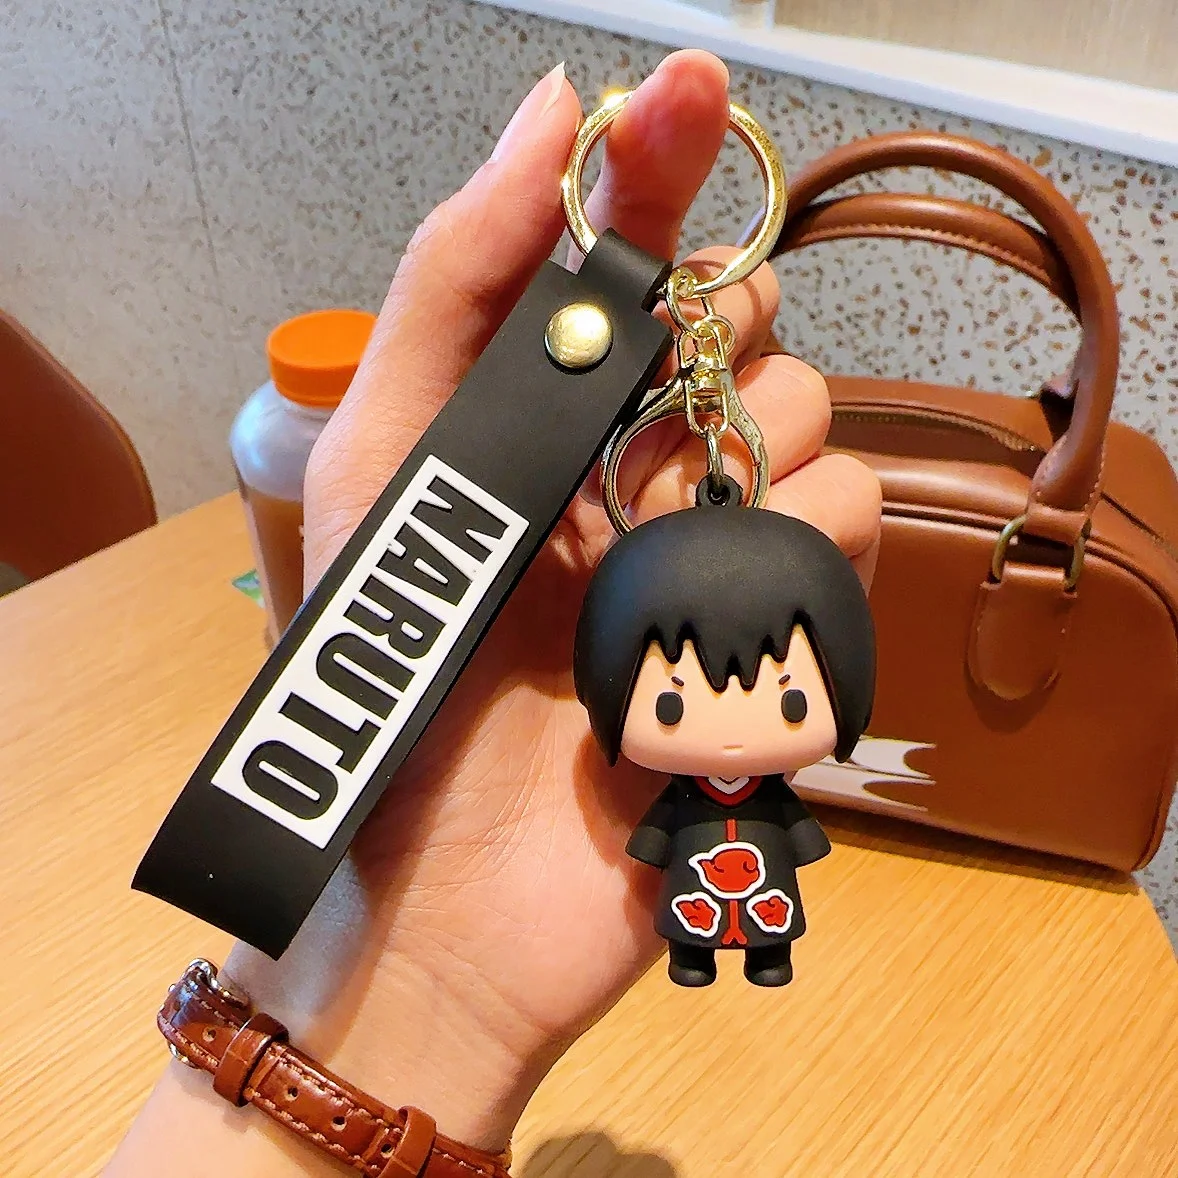 Popular Cartoon ninja Character Keychains Anime Narutos Doll Key Chain Promotional Gift Pendant Soft Rubber Pvc Keychain